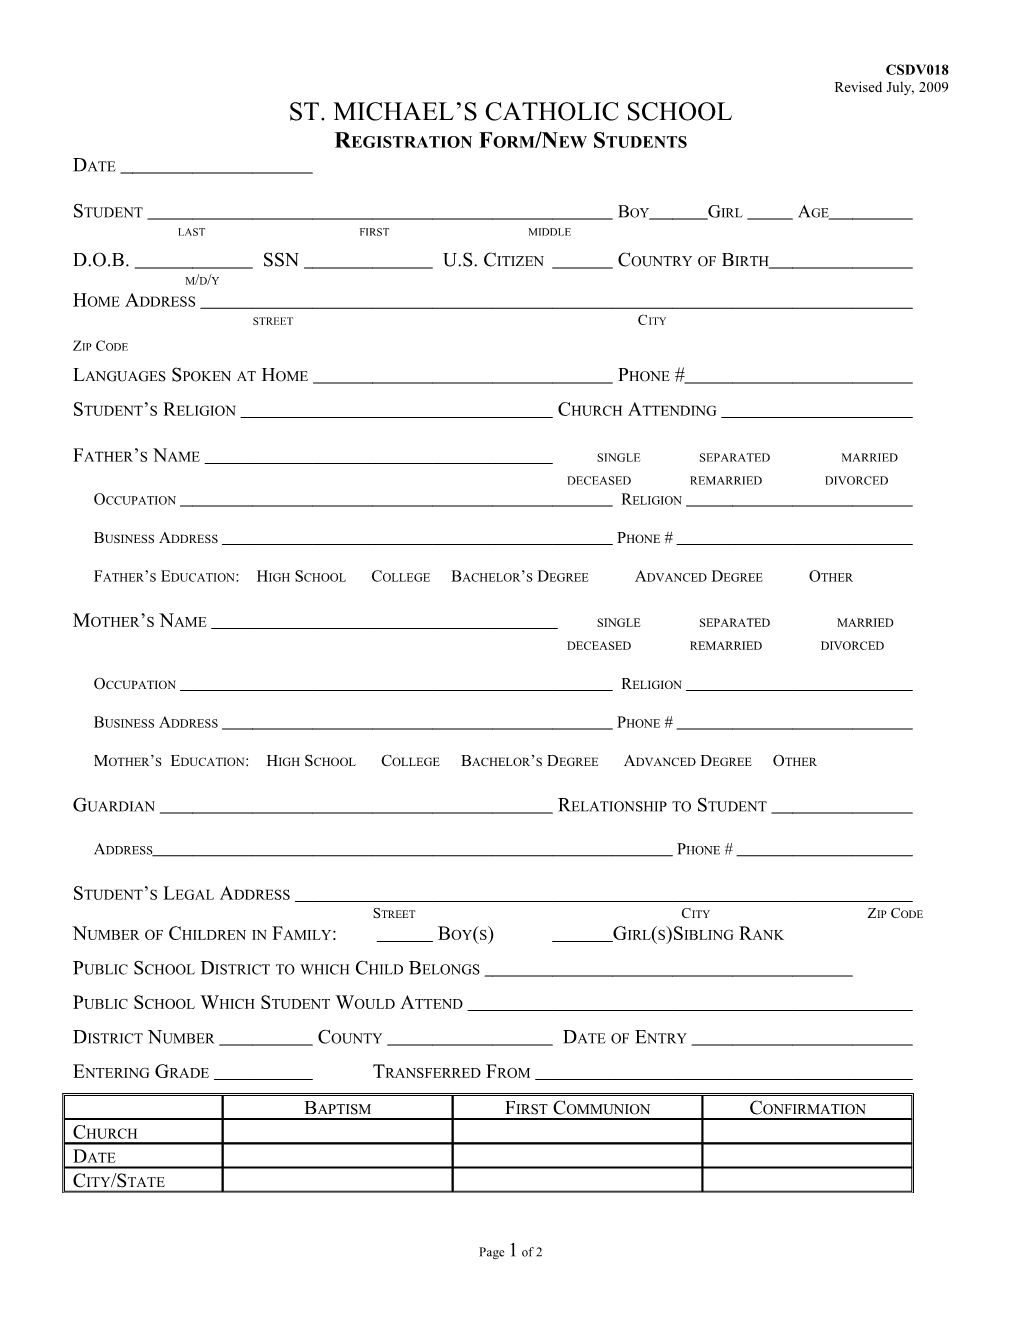 Registration Form (White)